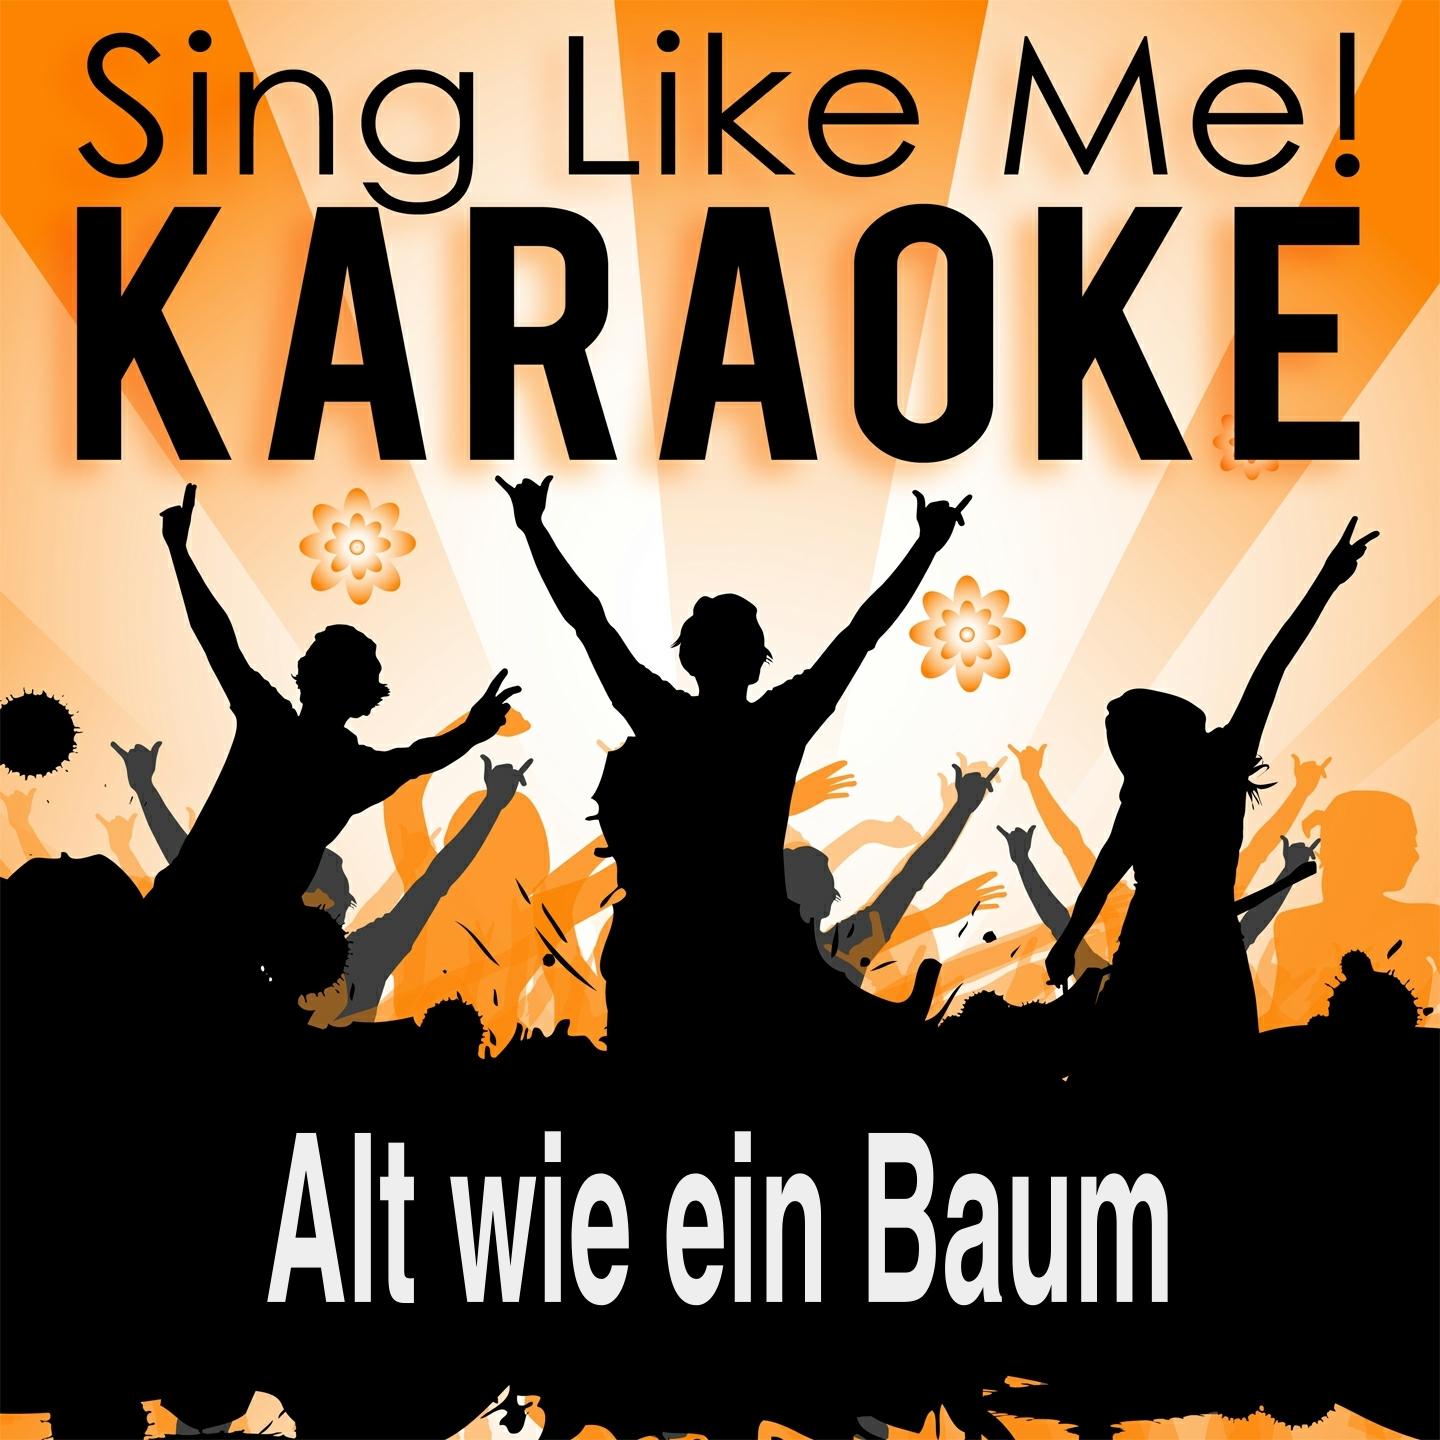 Alt wie ein Baum (Karaoke Version With Guide Melody) (Originally Performed By Peter Wackel)